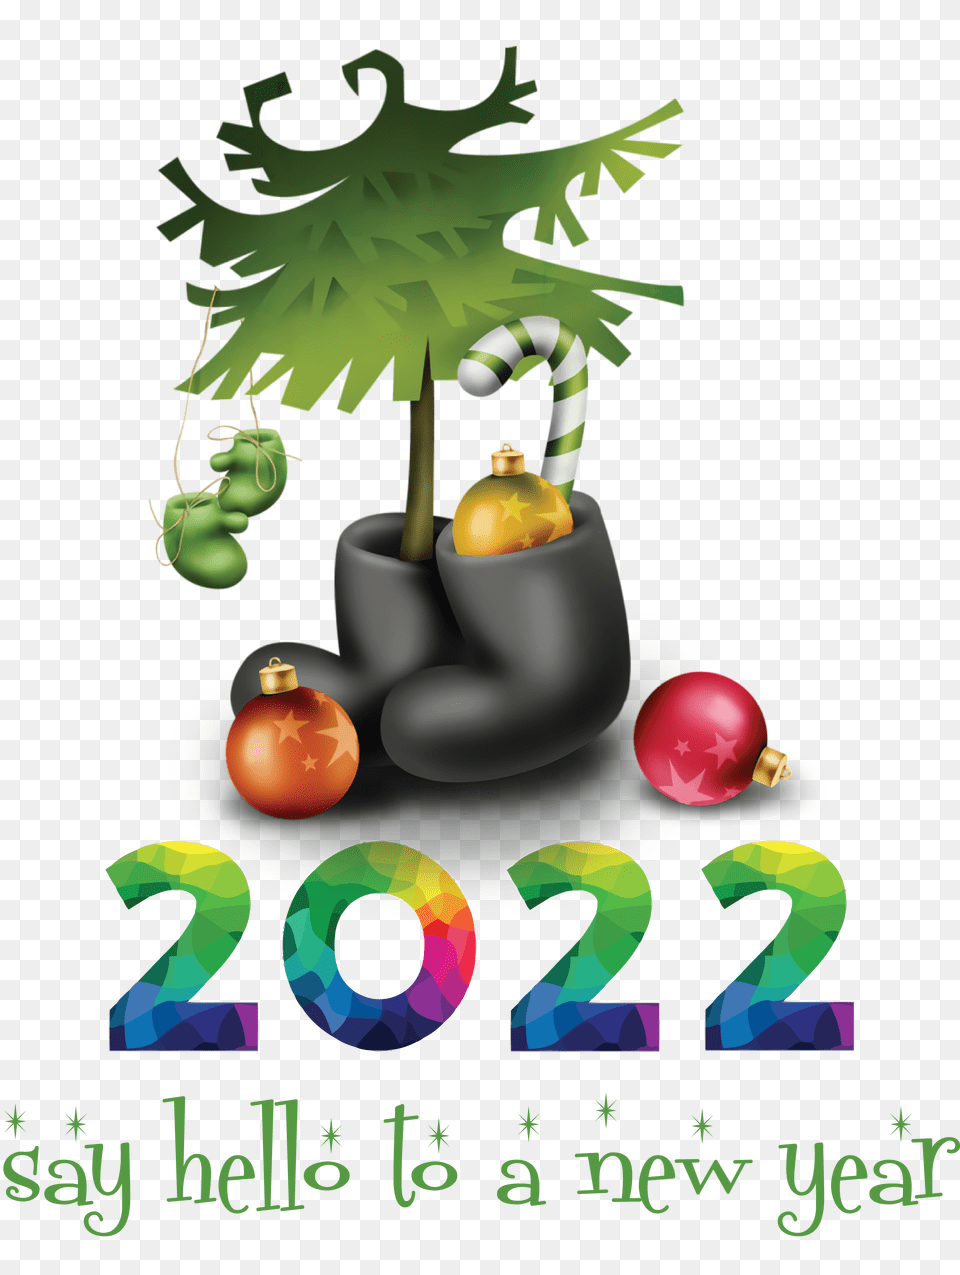 Energy Drink Orange Juice Juice For New Year 2022, Food, Fruit, Plant, Produce Png Image